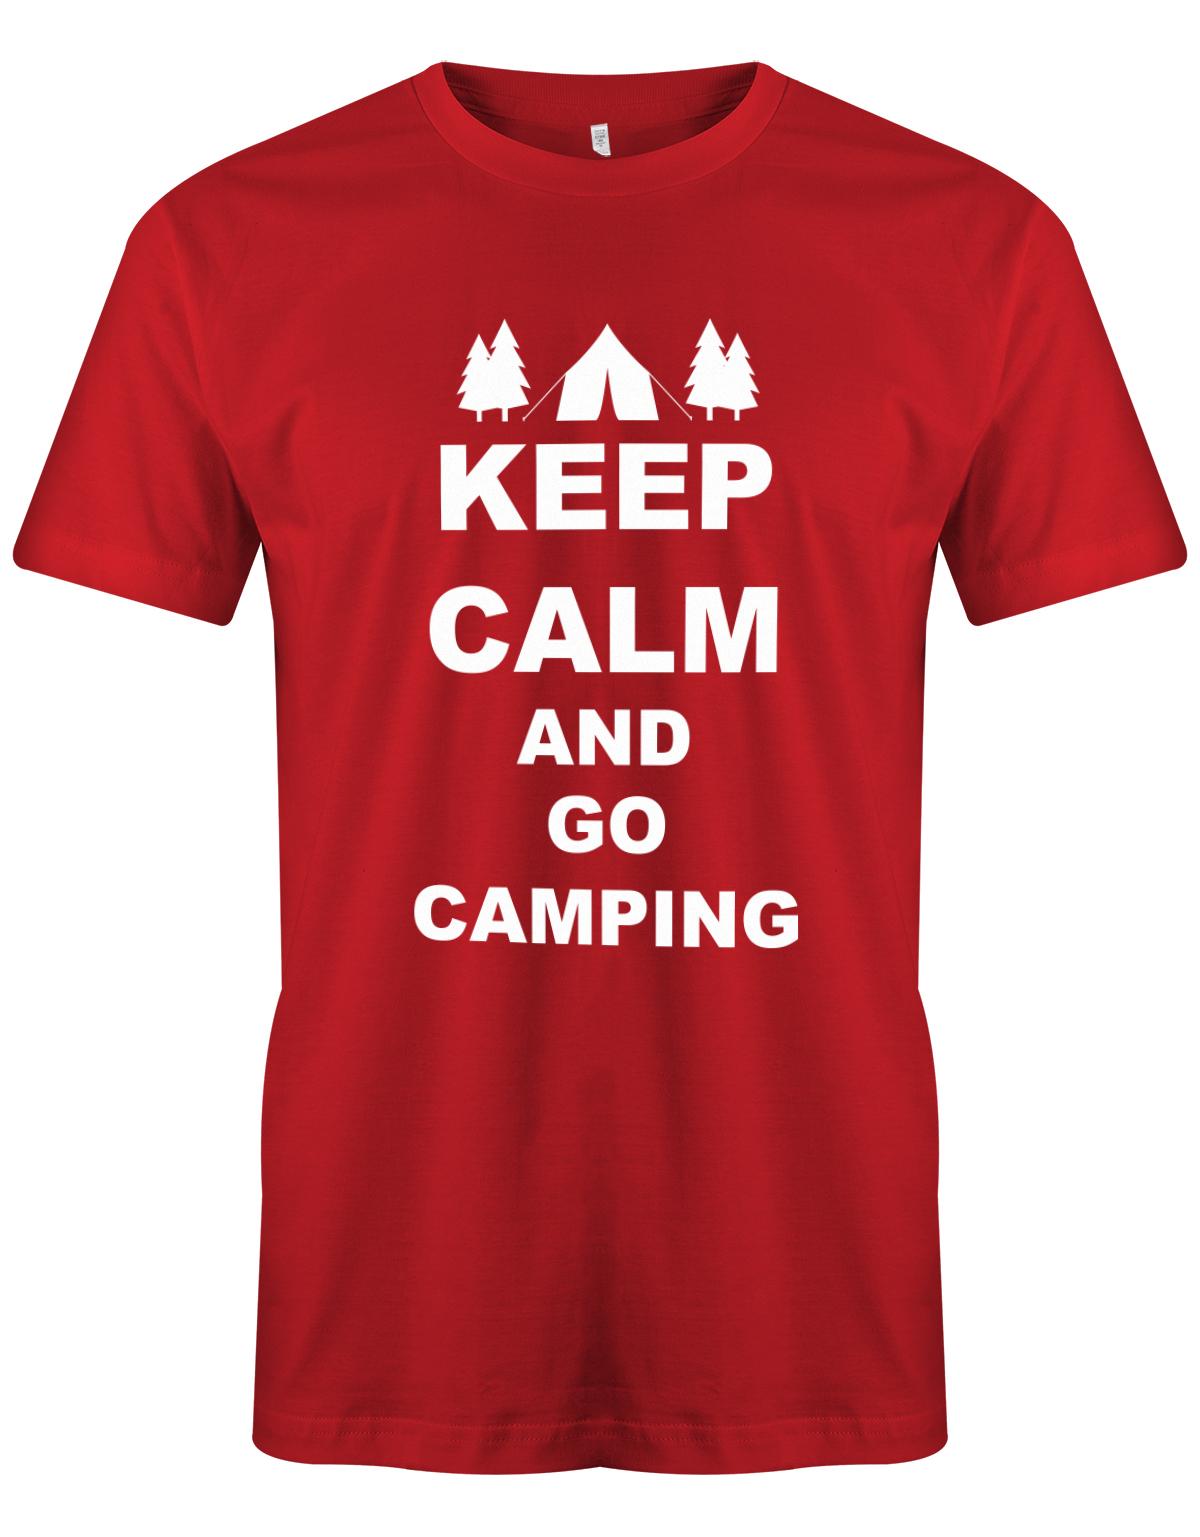 Keep-Calm-and-Go-Camping-Herren-Shirt-rot